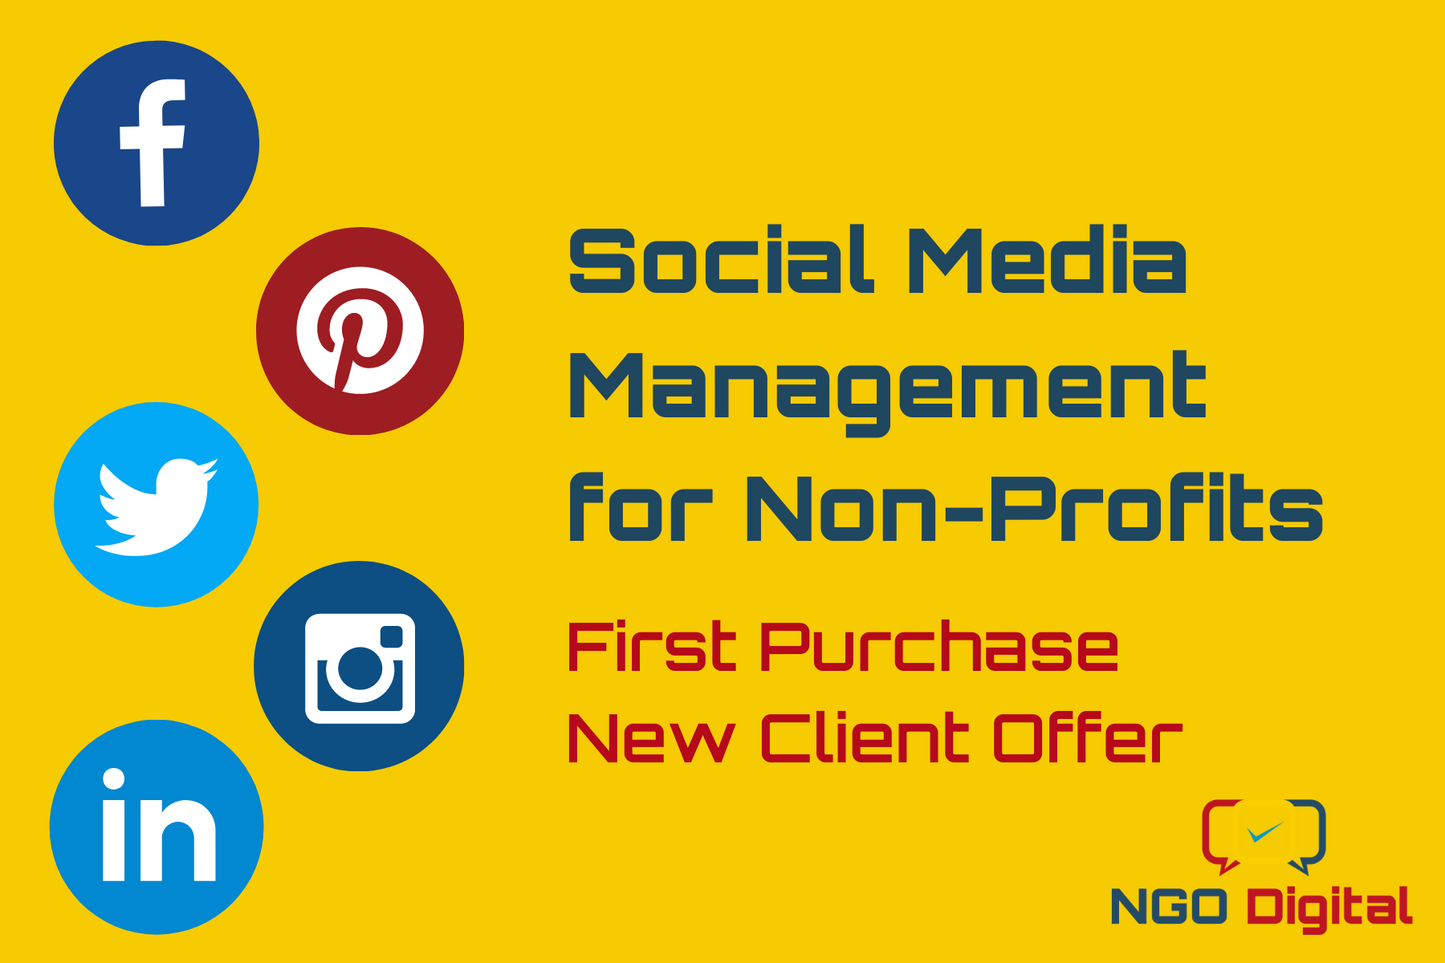 New Client Offer - 3 Months of Social Media Management